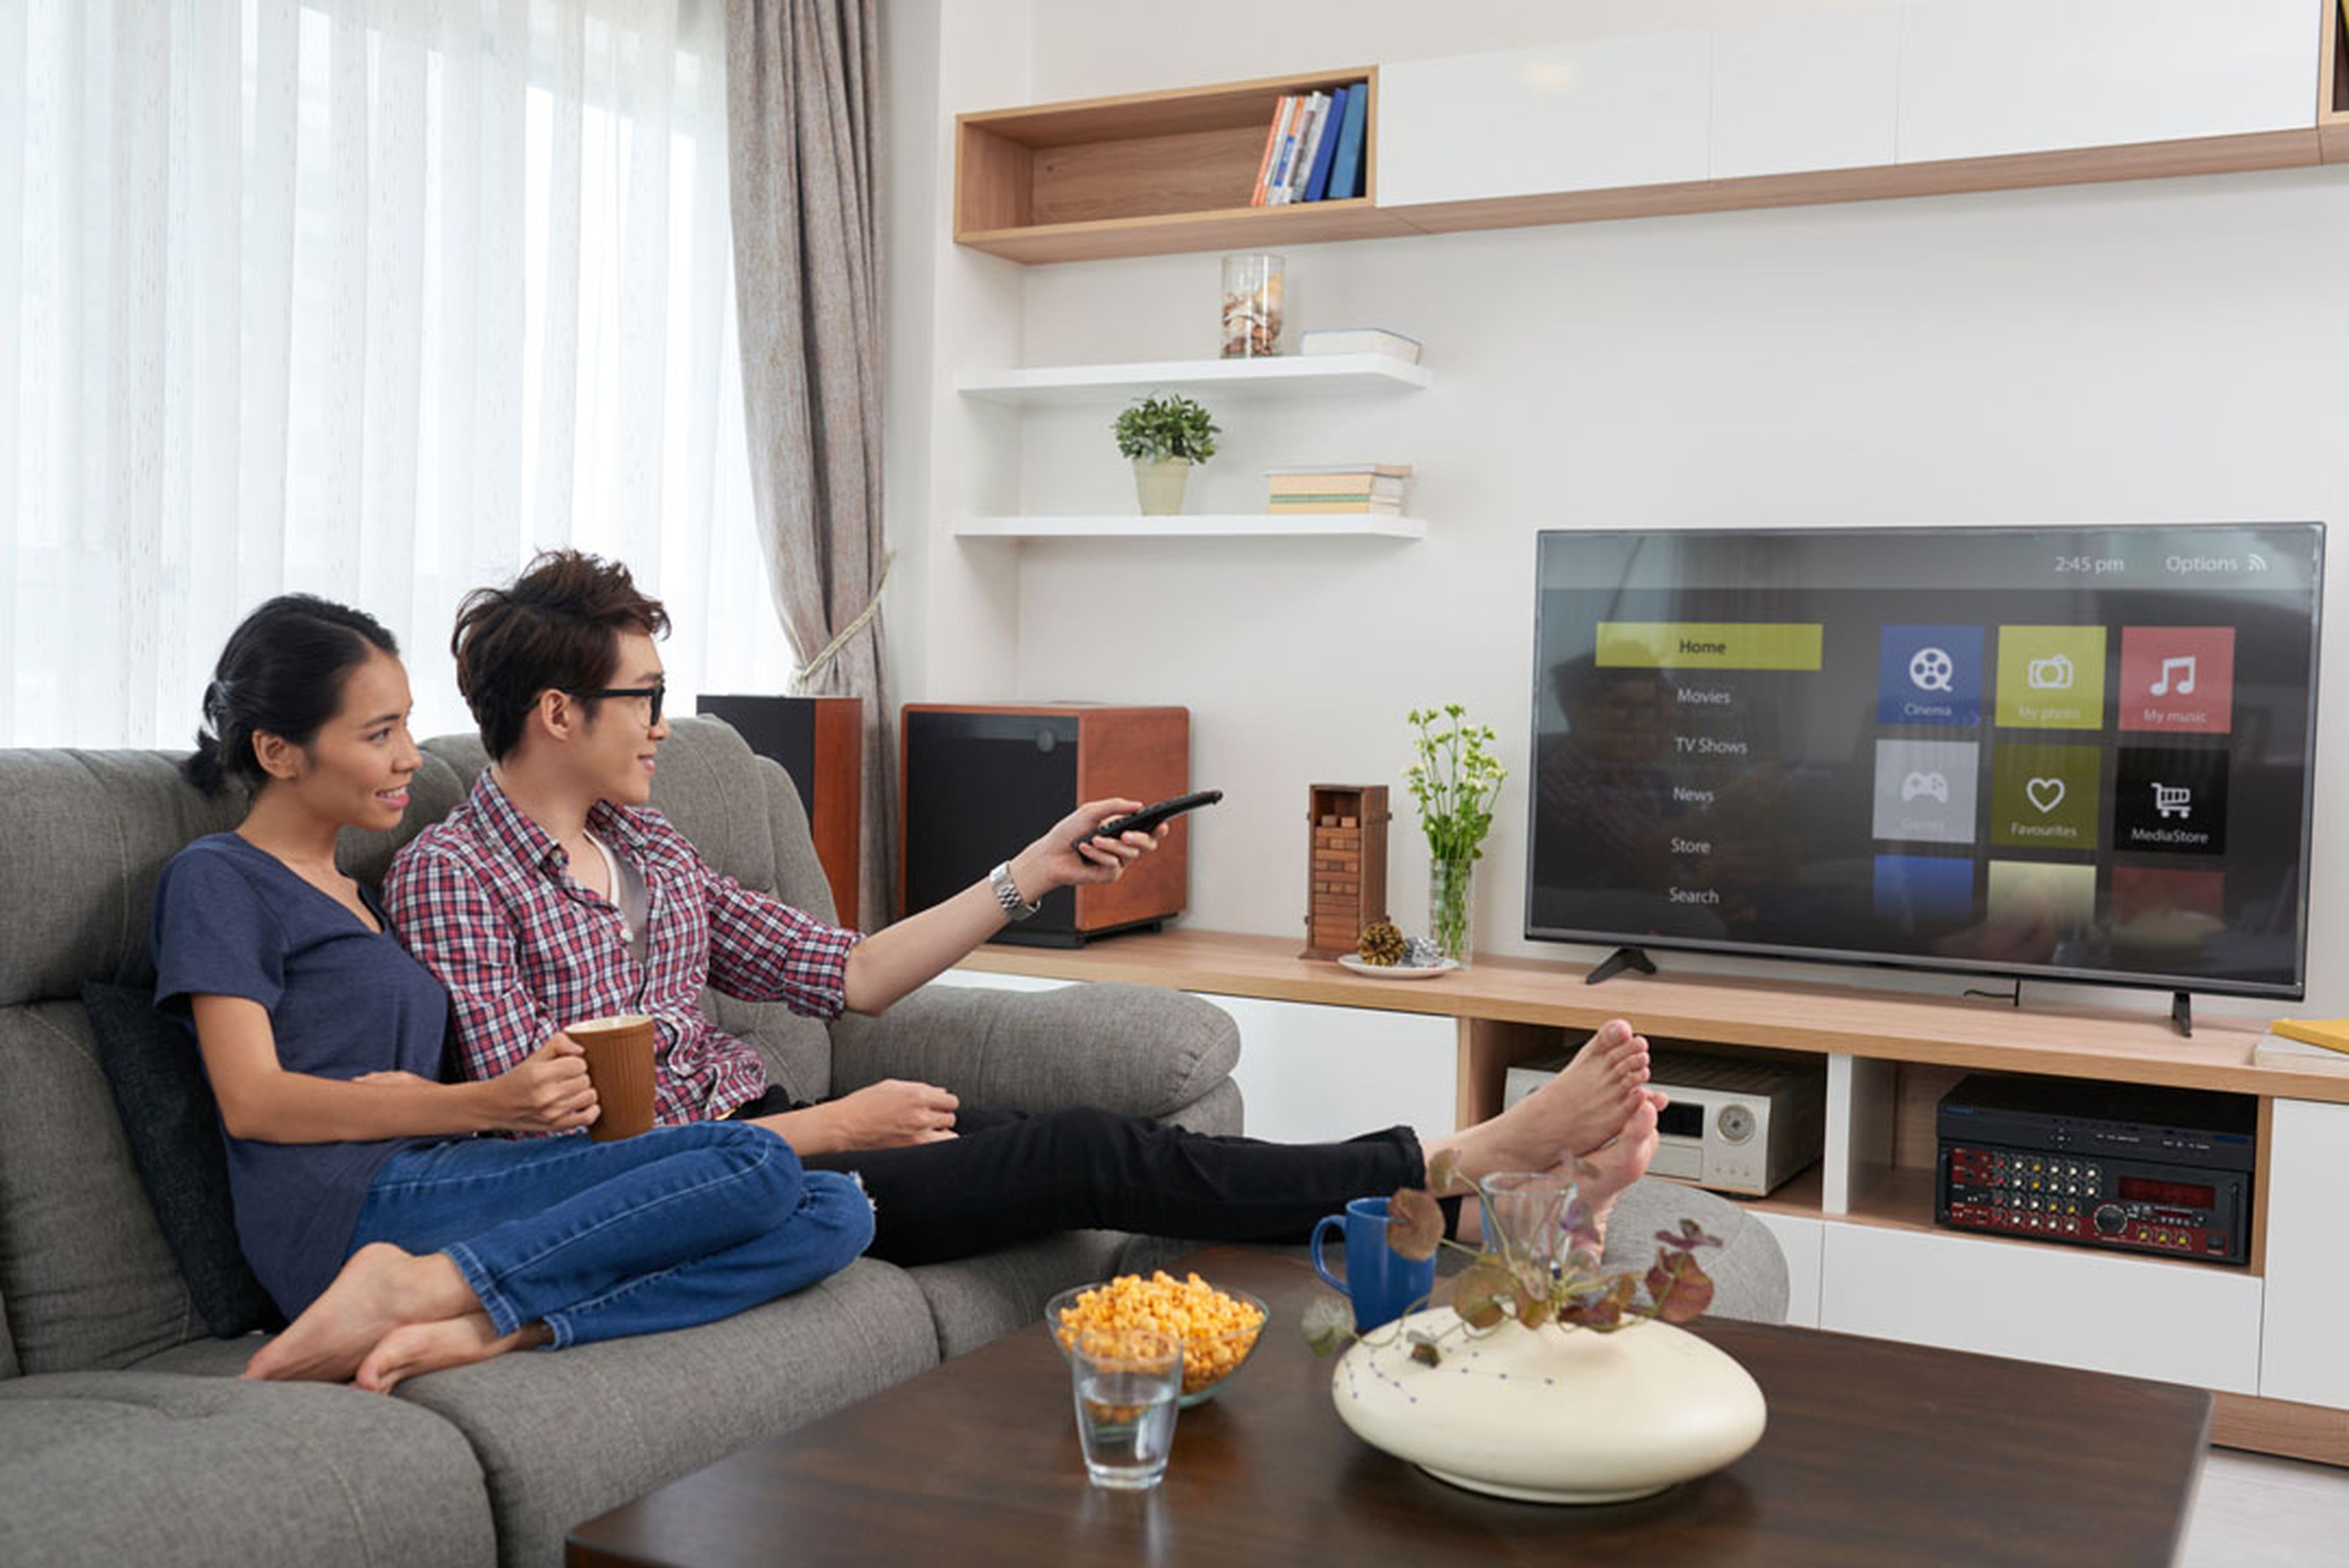 ▷ Televisores: Grandes ofertas en TV Samsung, LG, Xiaomi ✓